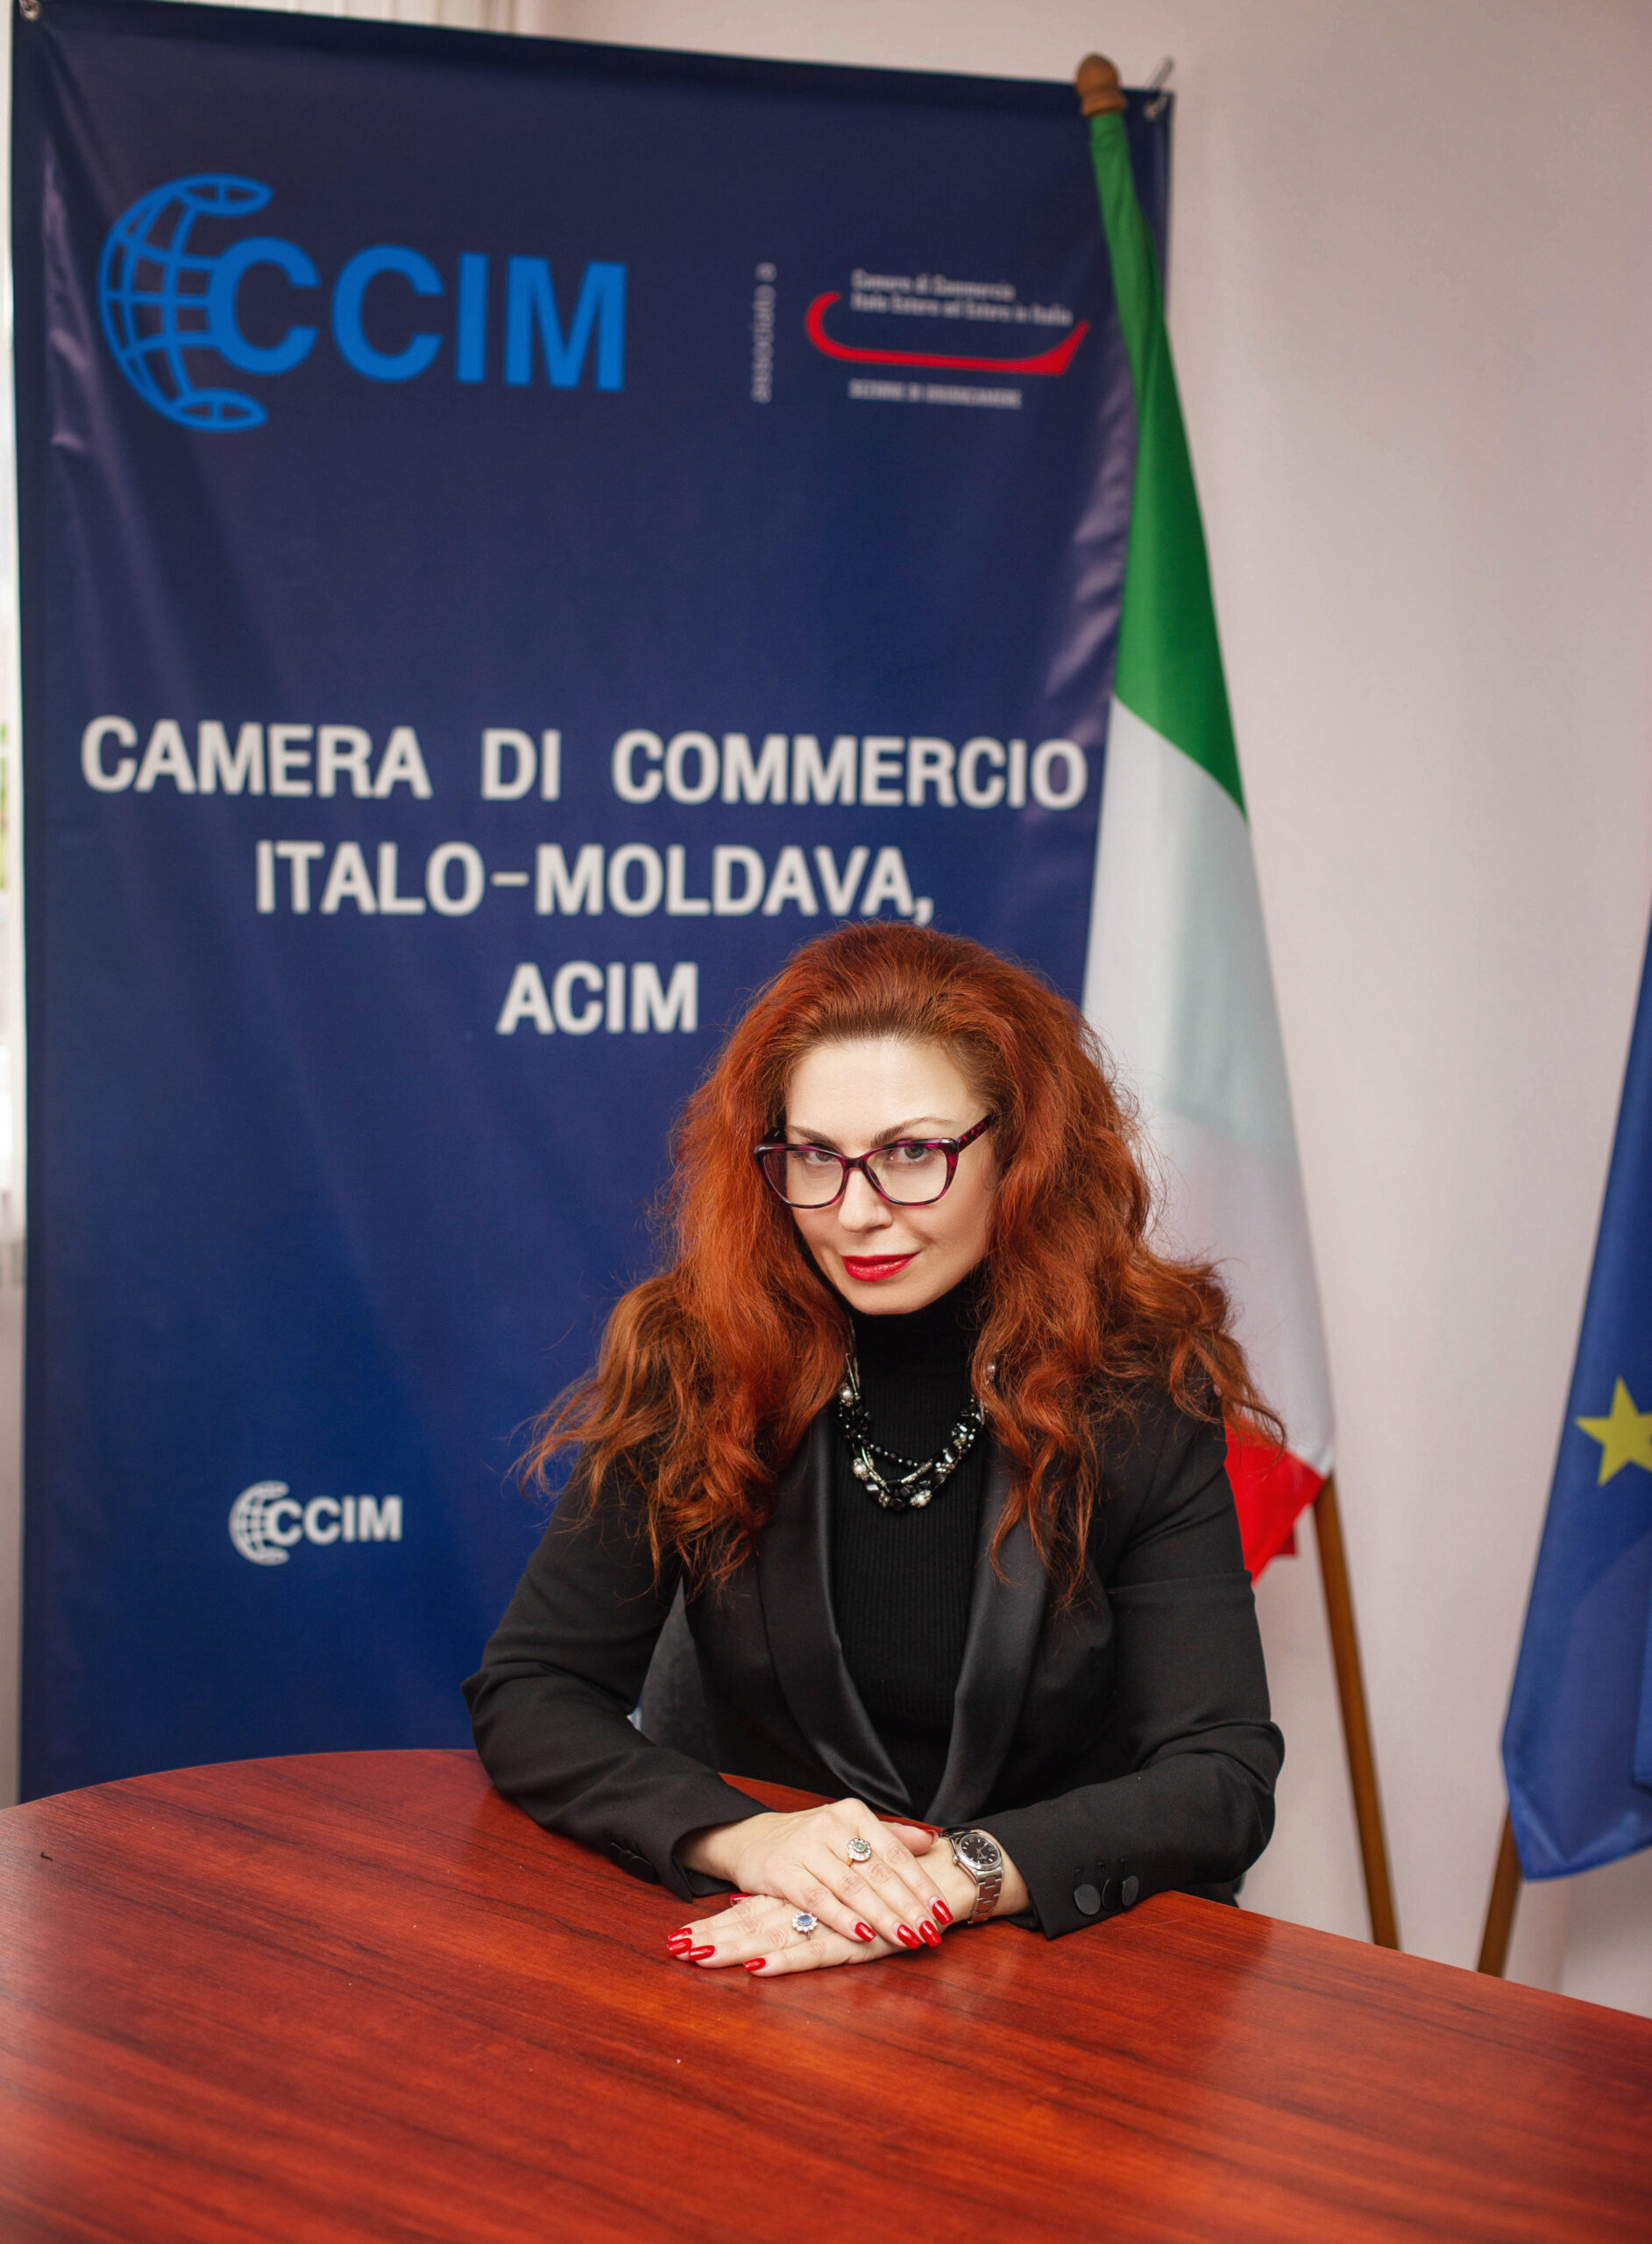 Interviu cu Eleonora PRIPA, Secretar general al Camerei de Comerț Italo-Moldava